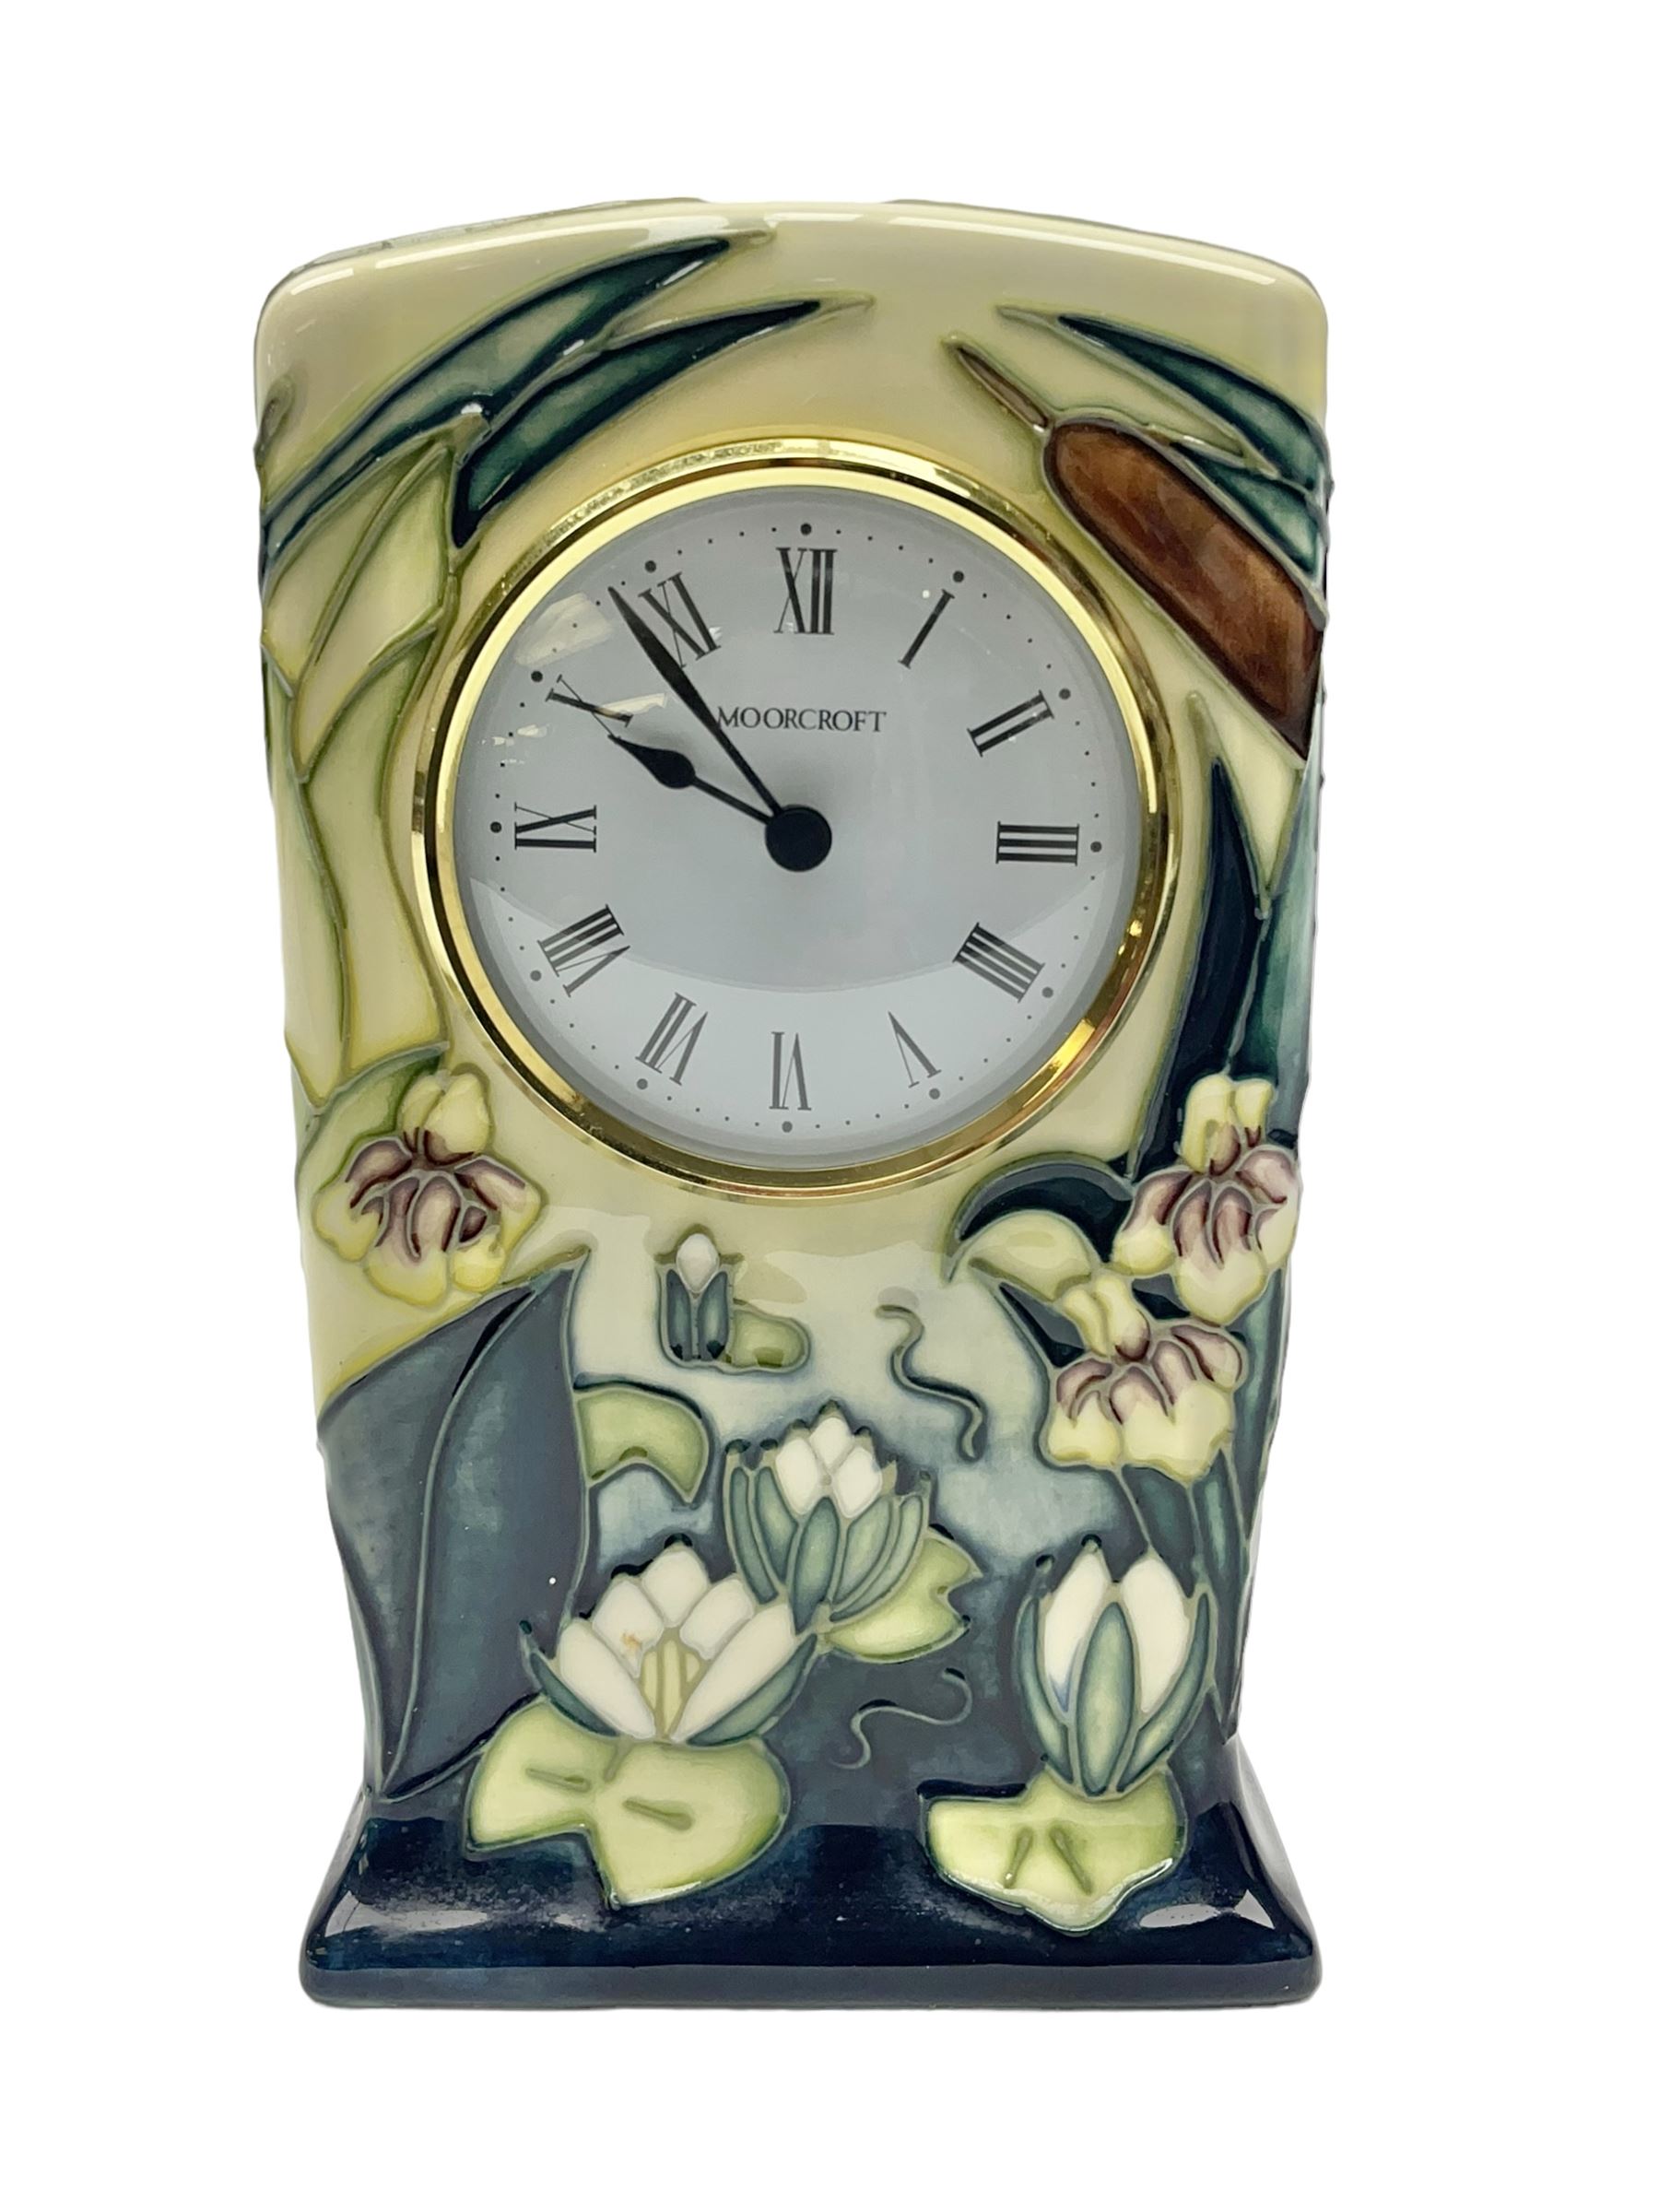 Moorcroft mantel clock